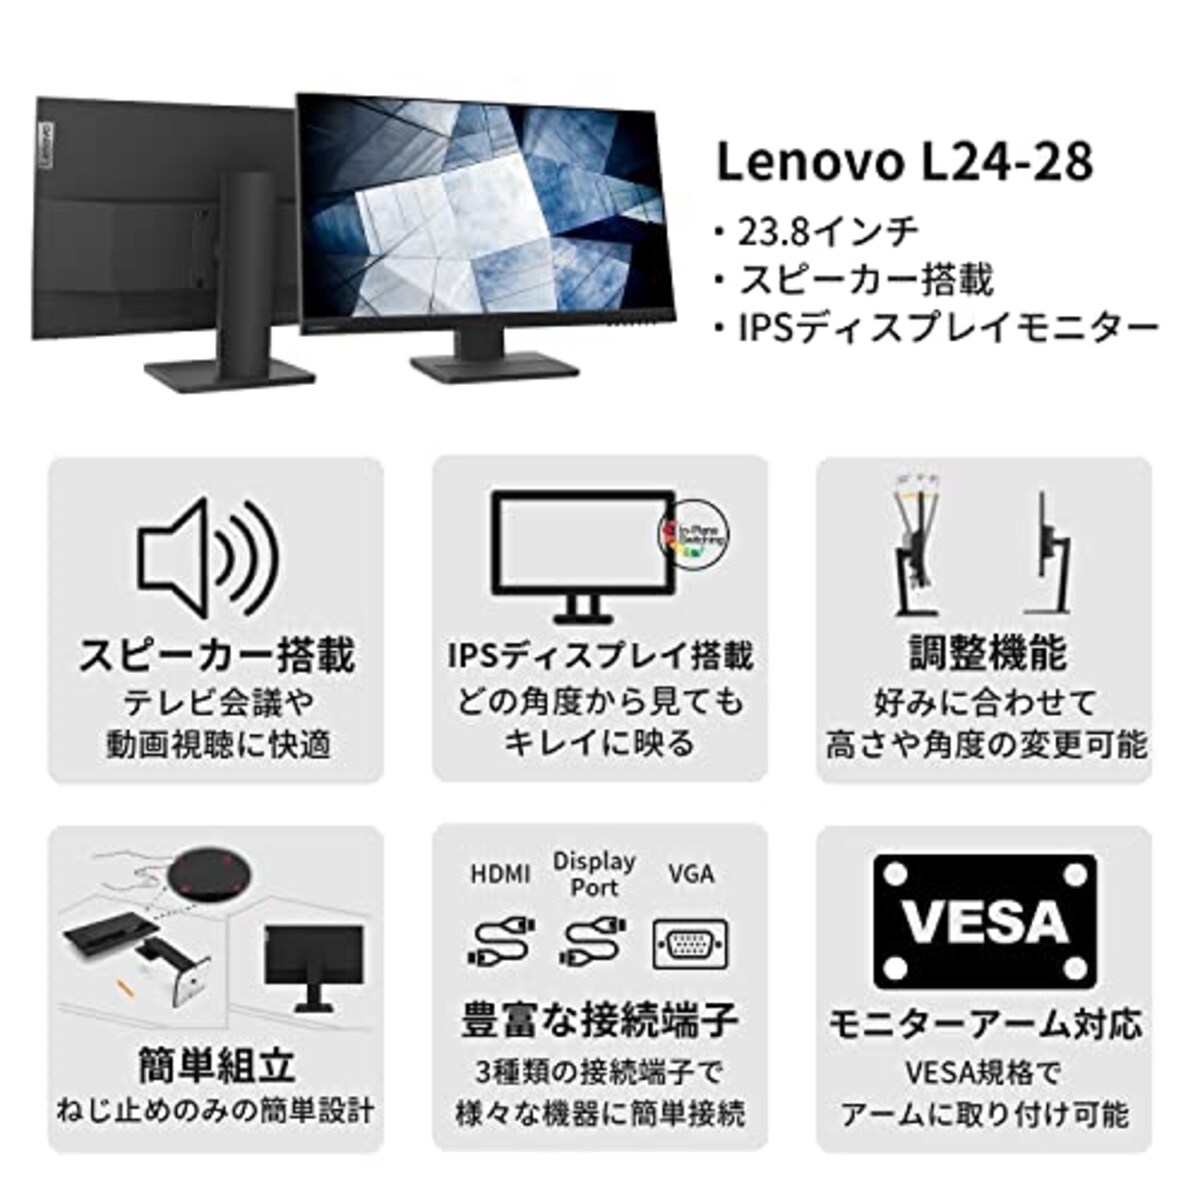  【Amazon.co.jp限定】Lenovo L24-28 モニター (23.8インチ IPS WLED液晶 FHD メーカー3年保証 スピーカー付 非光沢 高さ調整 角度調整 VESA HDMIケーブル付属) ブラック 66EBMAC4JP画像3 